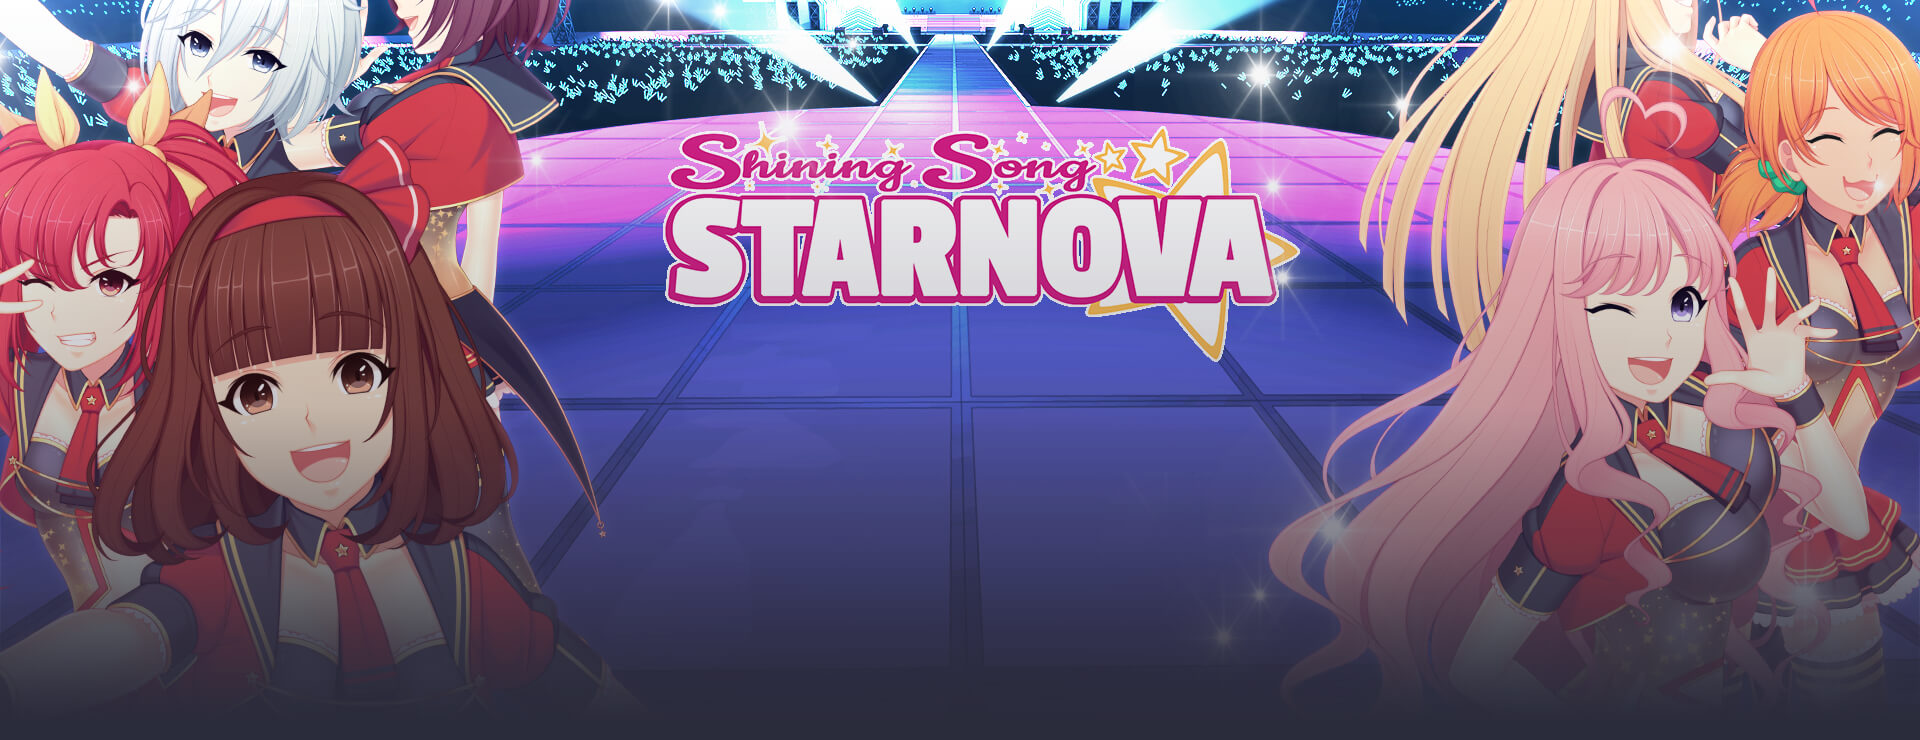 Shining Song Starnova thumbnail